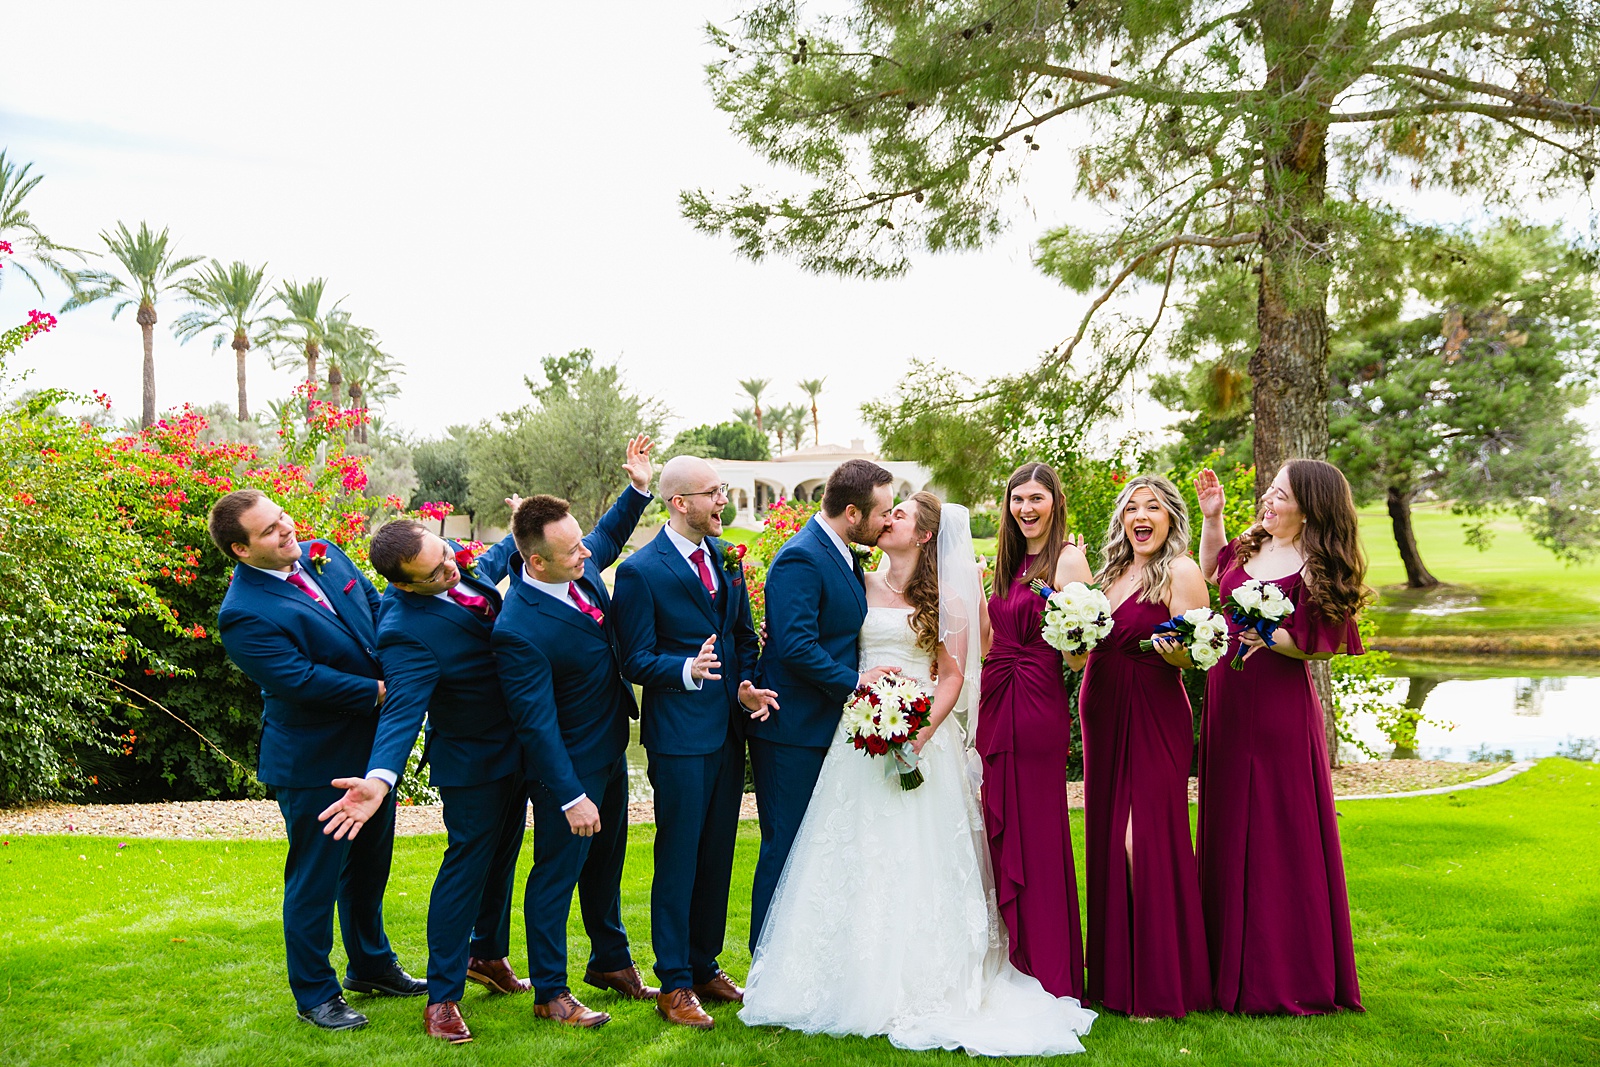 Bridal party having fun together at Ocotillo Oasis weding by Arizona wedding photographer PMA Photography.